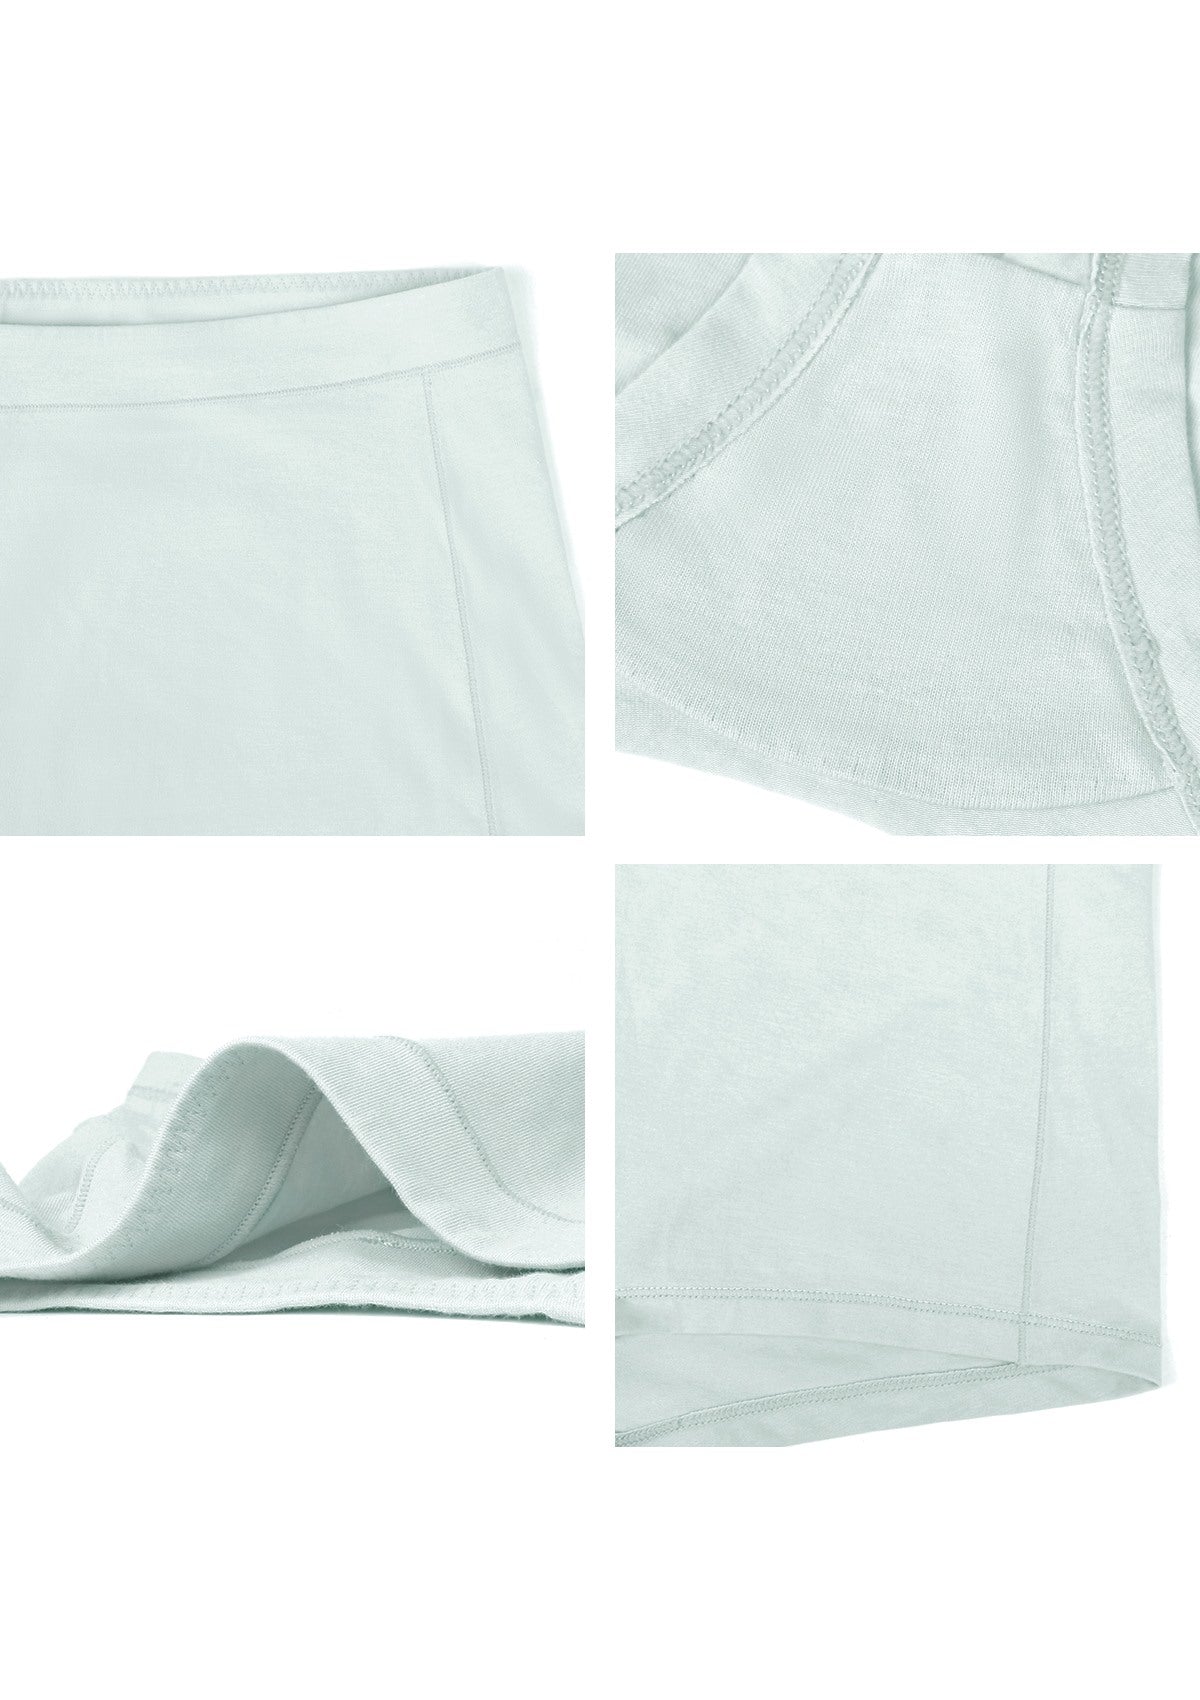 All-Day Comfort Mid-Rise Cotton Boyshorts Underwear 3 Pack - M / Black+Beige+Green